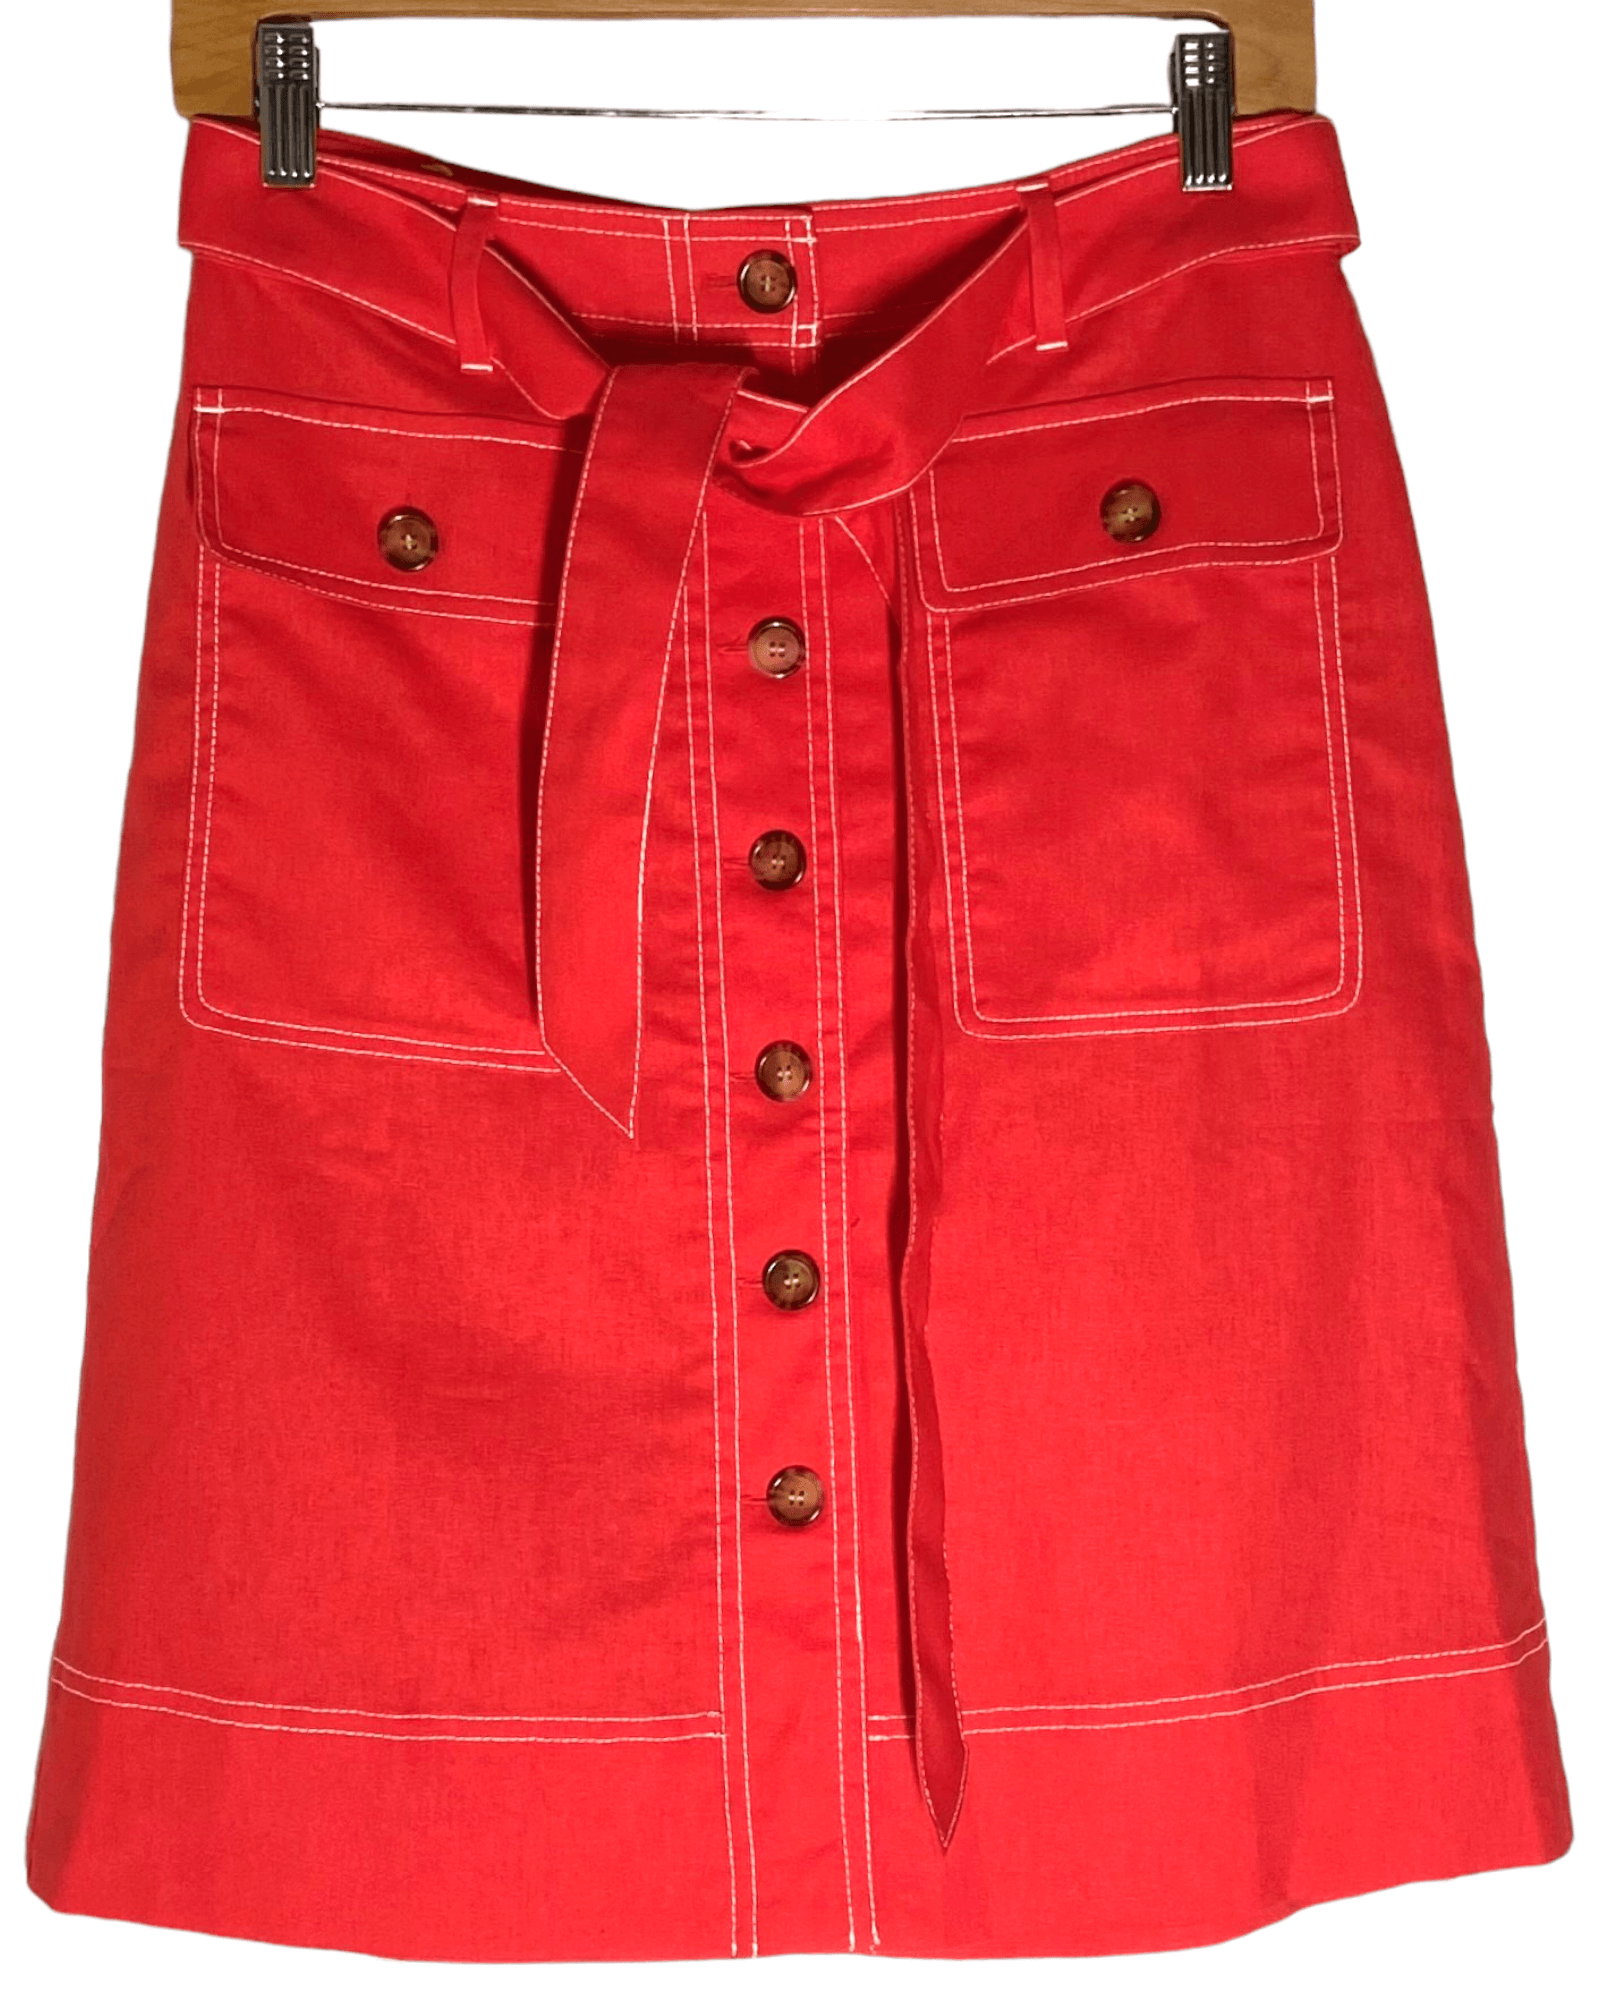 Bright Spring J.CREW persimmon red linen button through midi skirt 